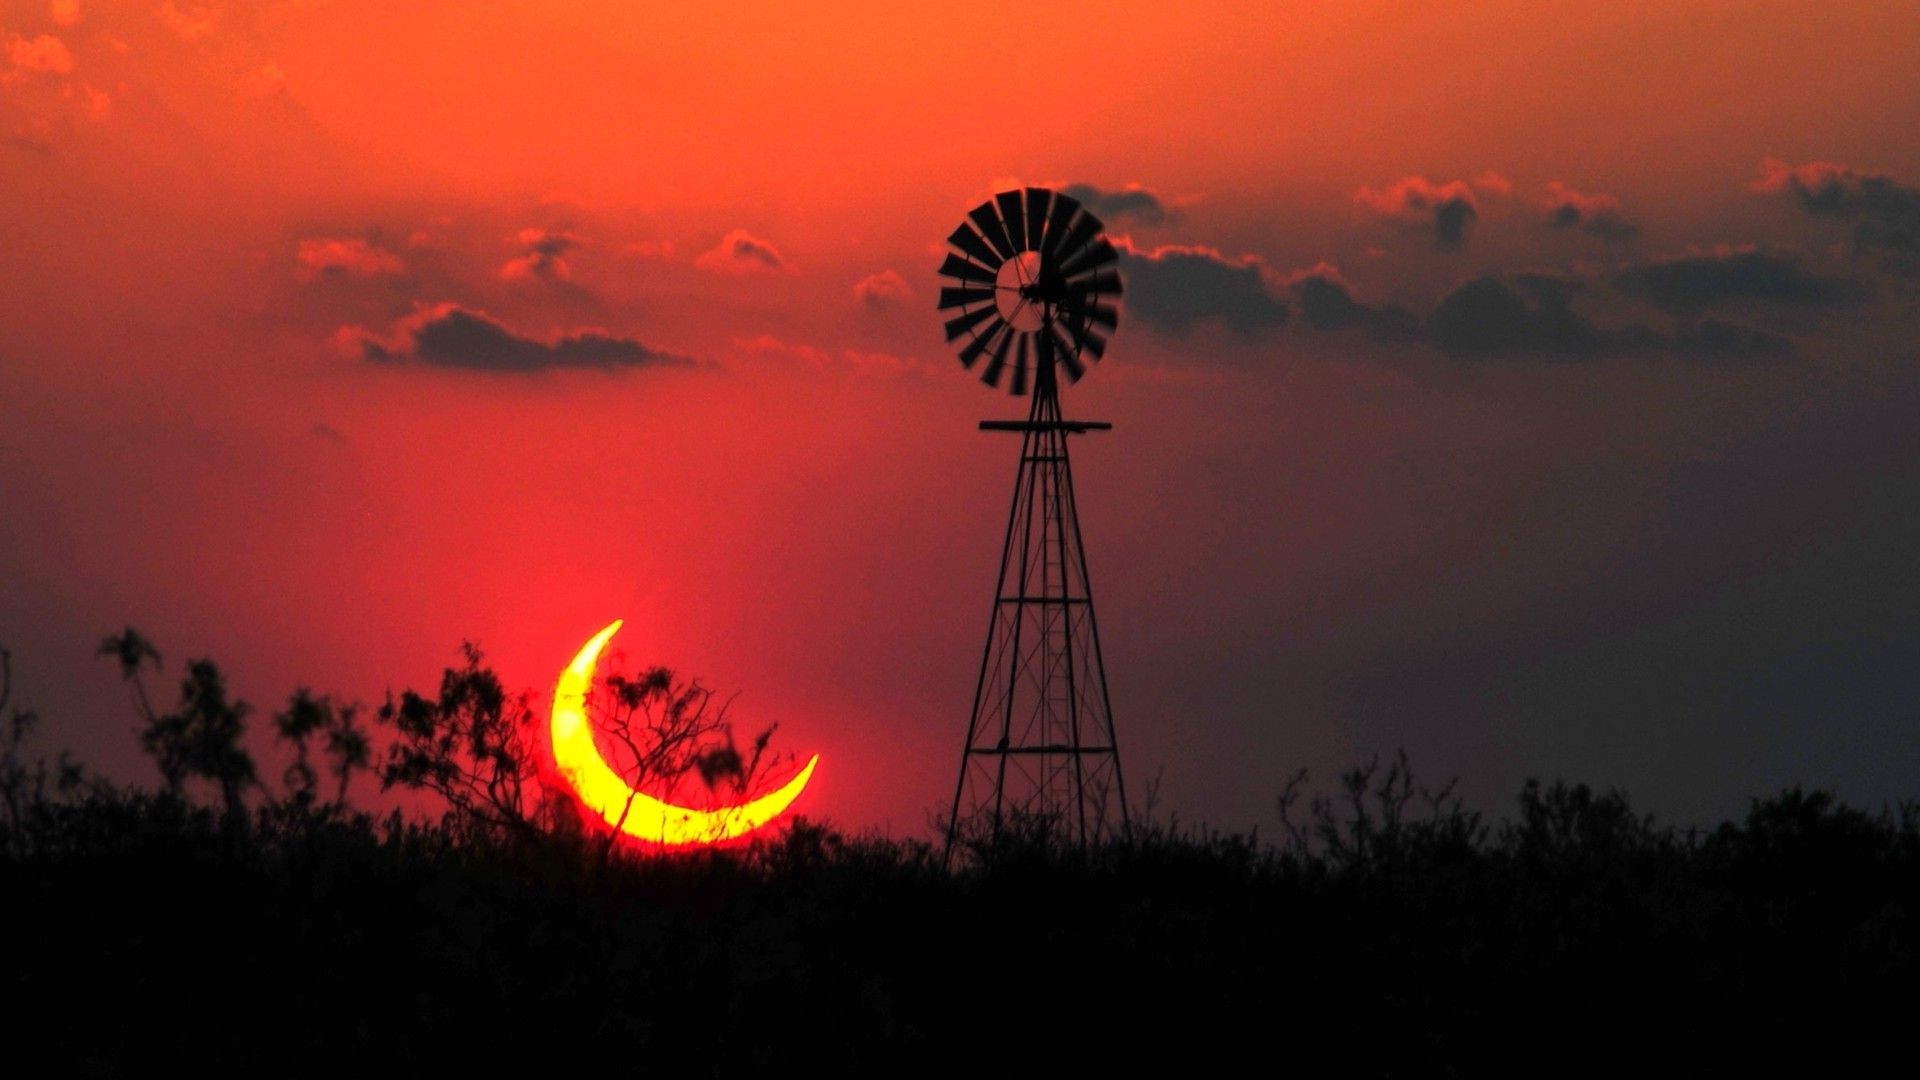 texas wallpaper,himmel,windmühle,roter himmel am morgen,sonnenaufgang,sonnenuntergang